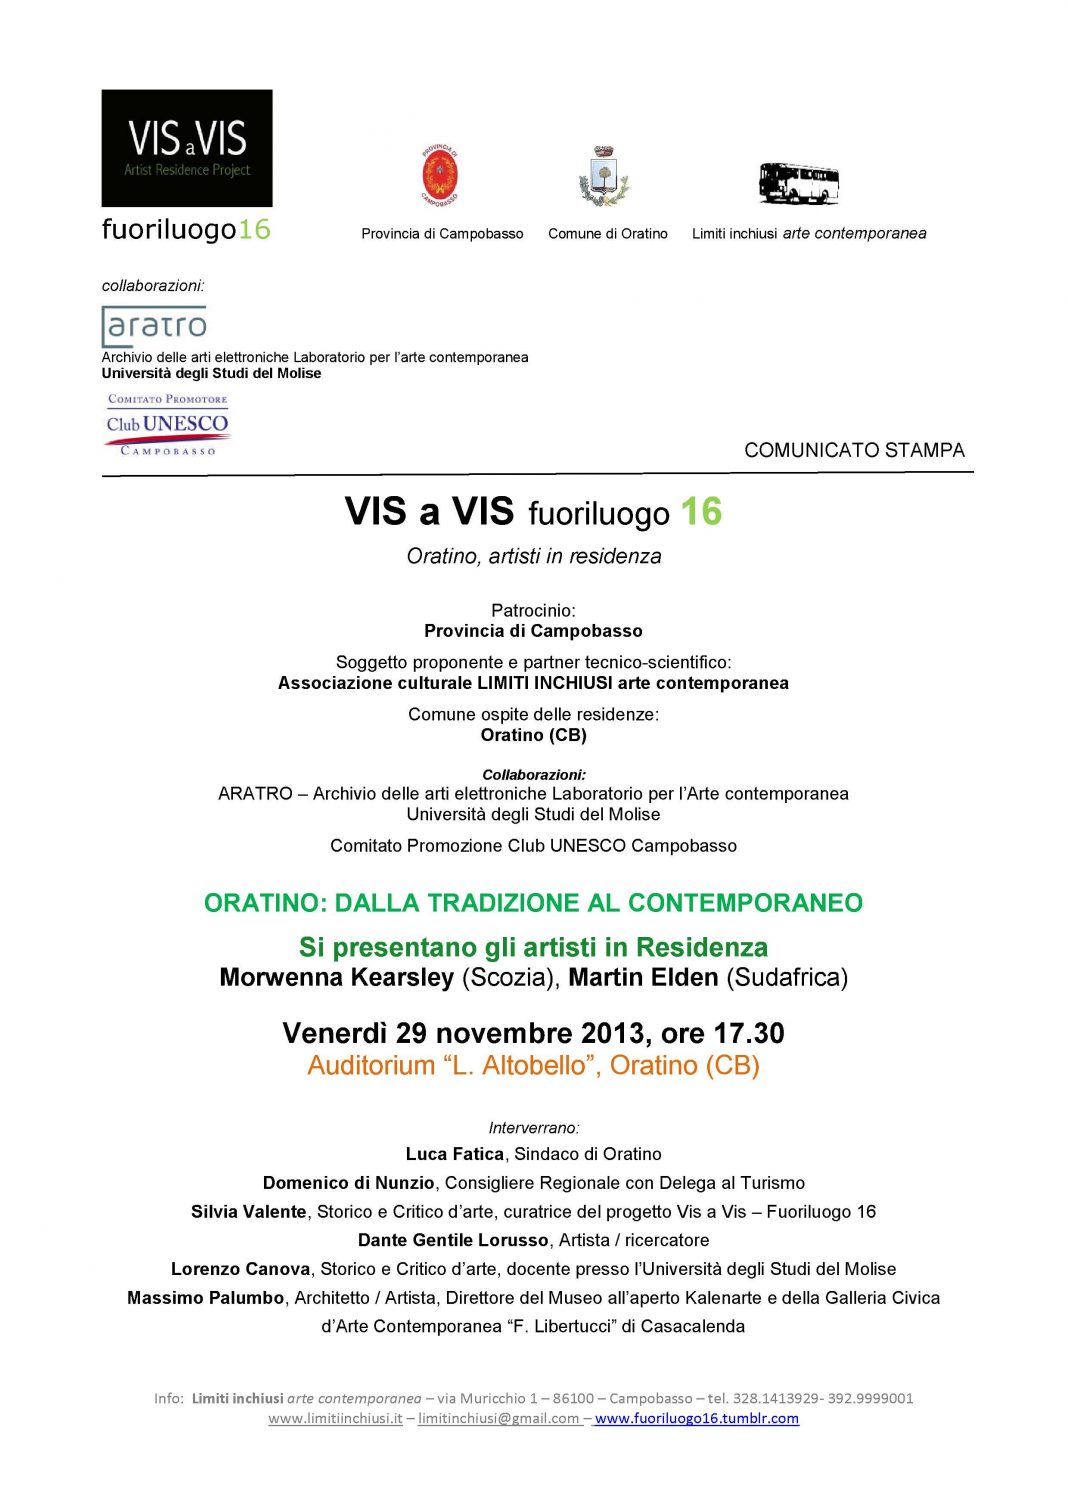 VIS a VIS fuoriluogo 16https://www.exibart.com/repository/media/eventi/2013/11/vis-a-vis-fuoriluogo-16-1068x1511.jpg